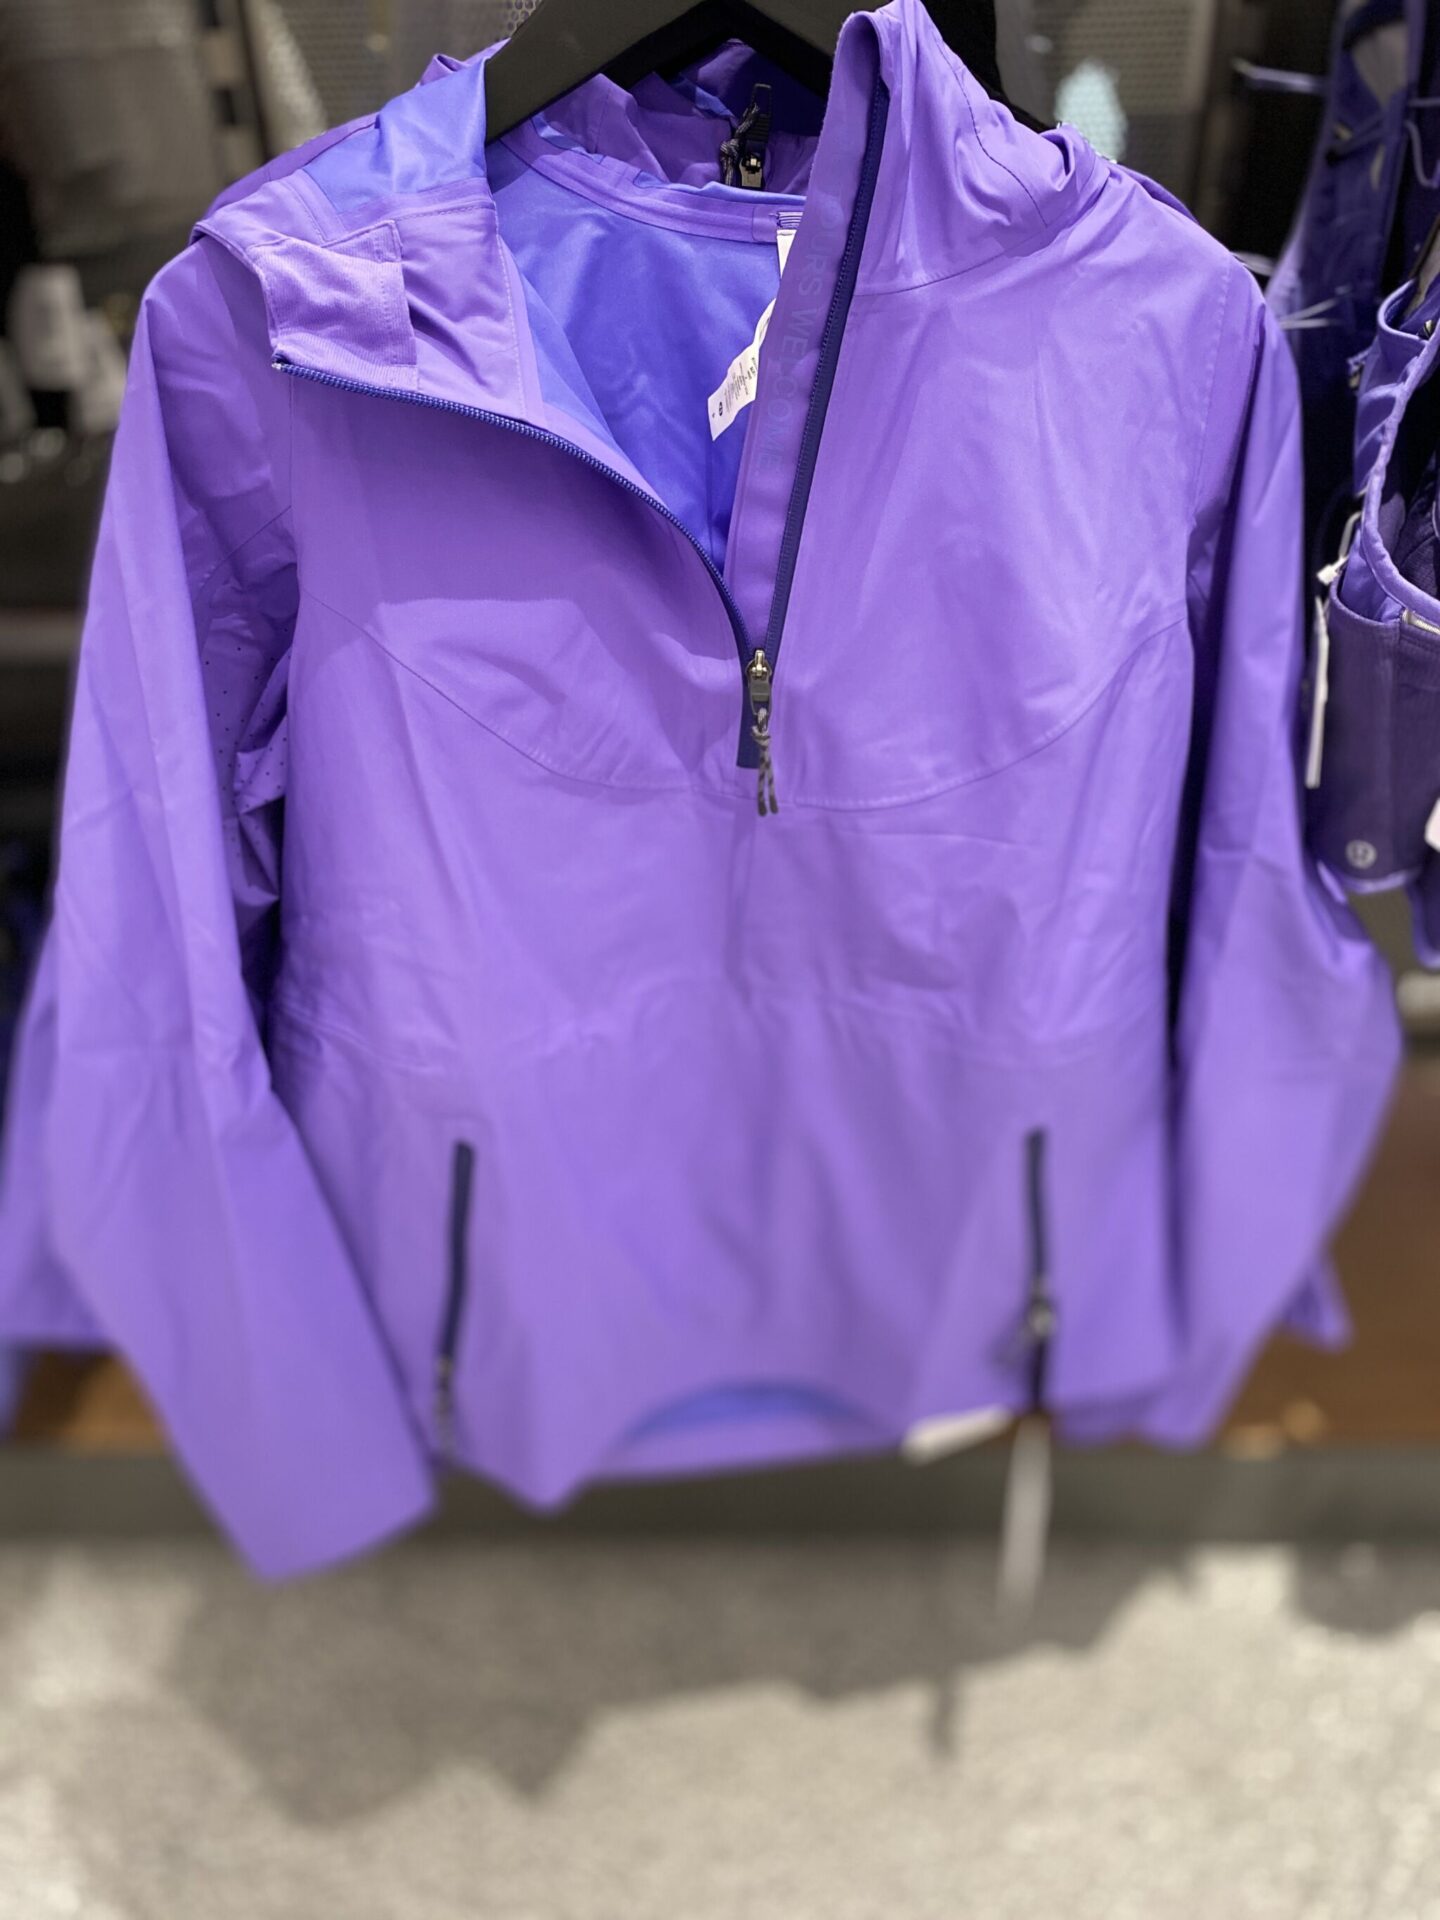 lululemon jacket for hiking - waterproof - running jacket - lightweight